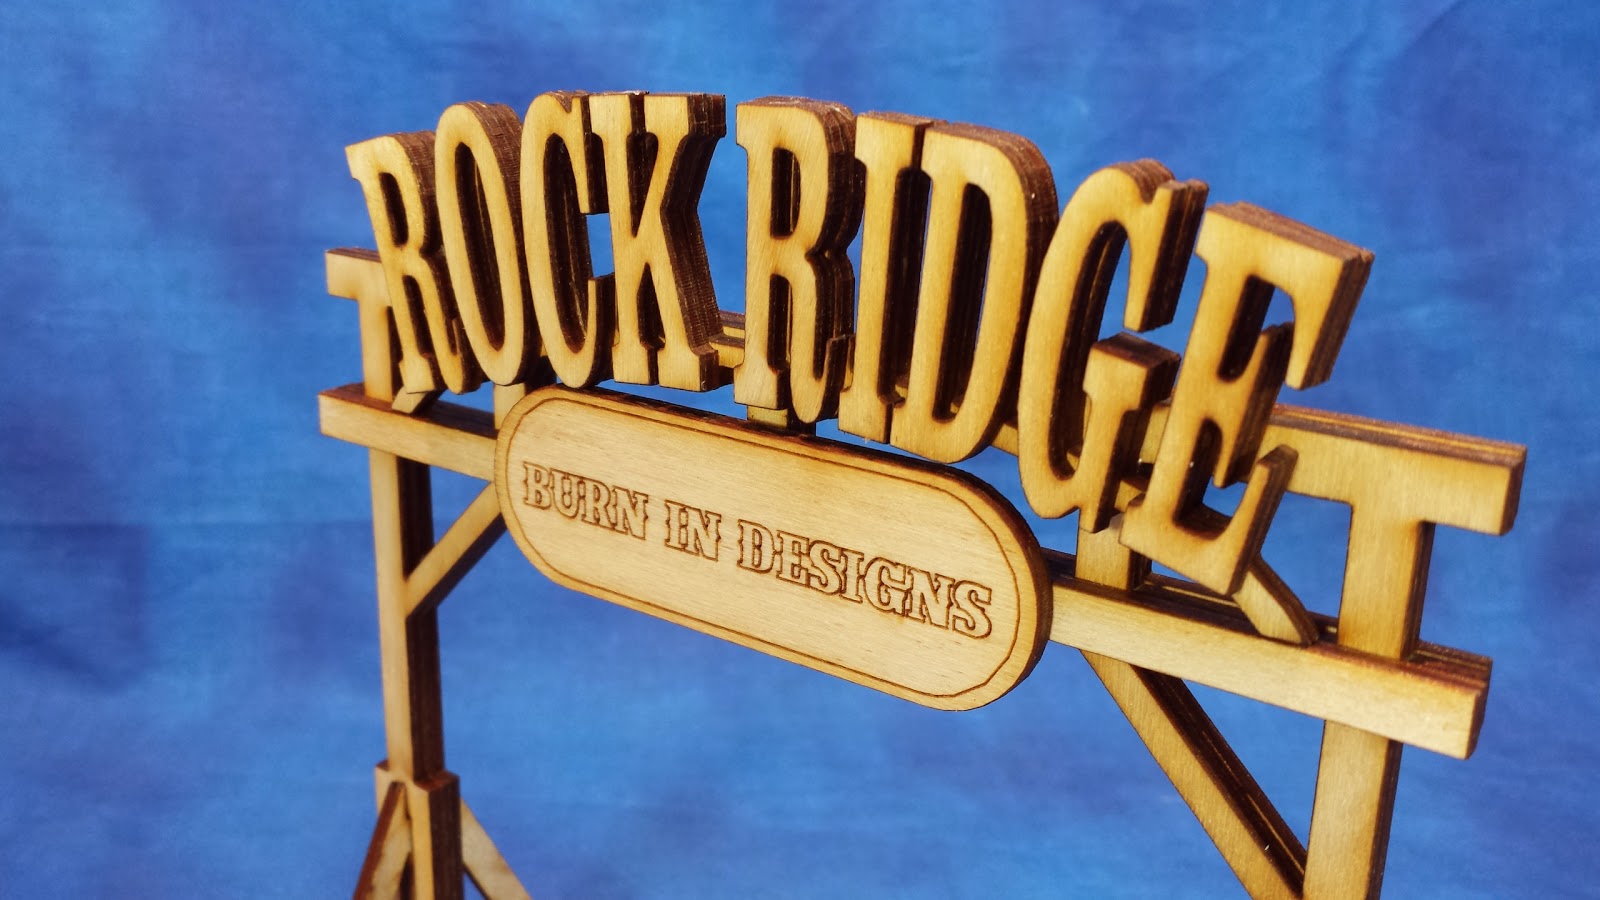 Welcome to Rock Ridge 28-35mm Western Buildings by Burn In Designs